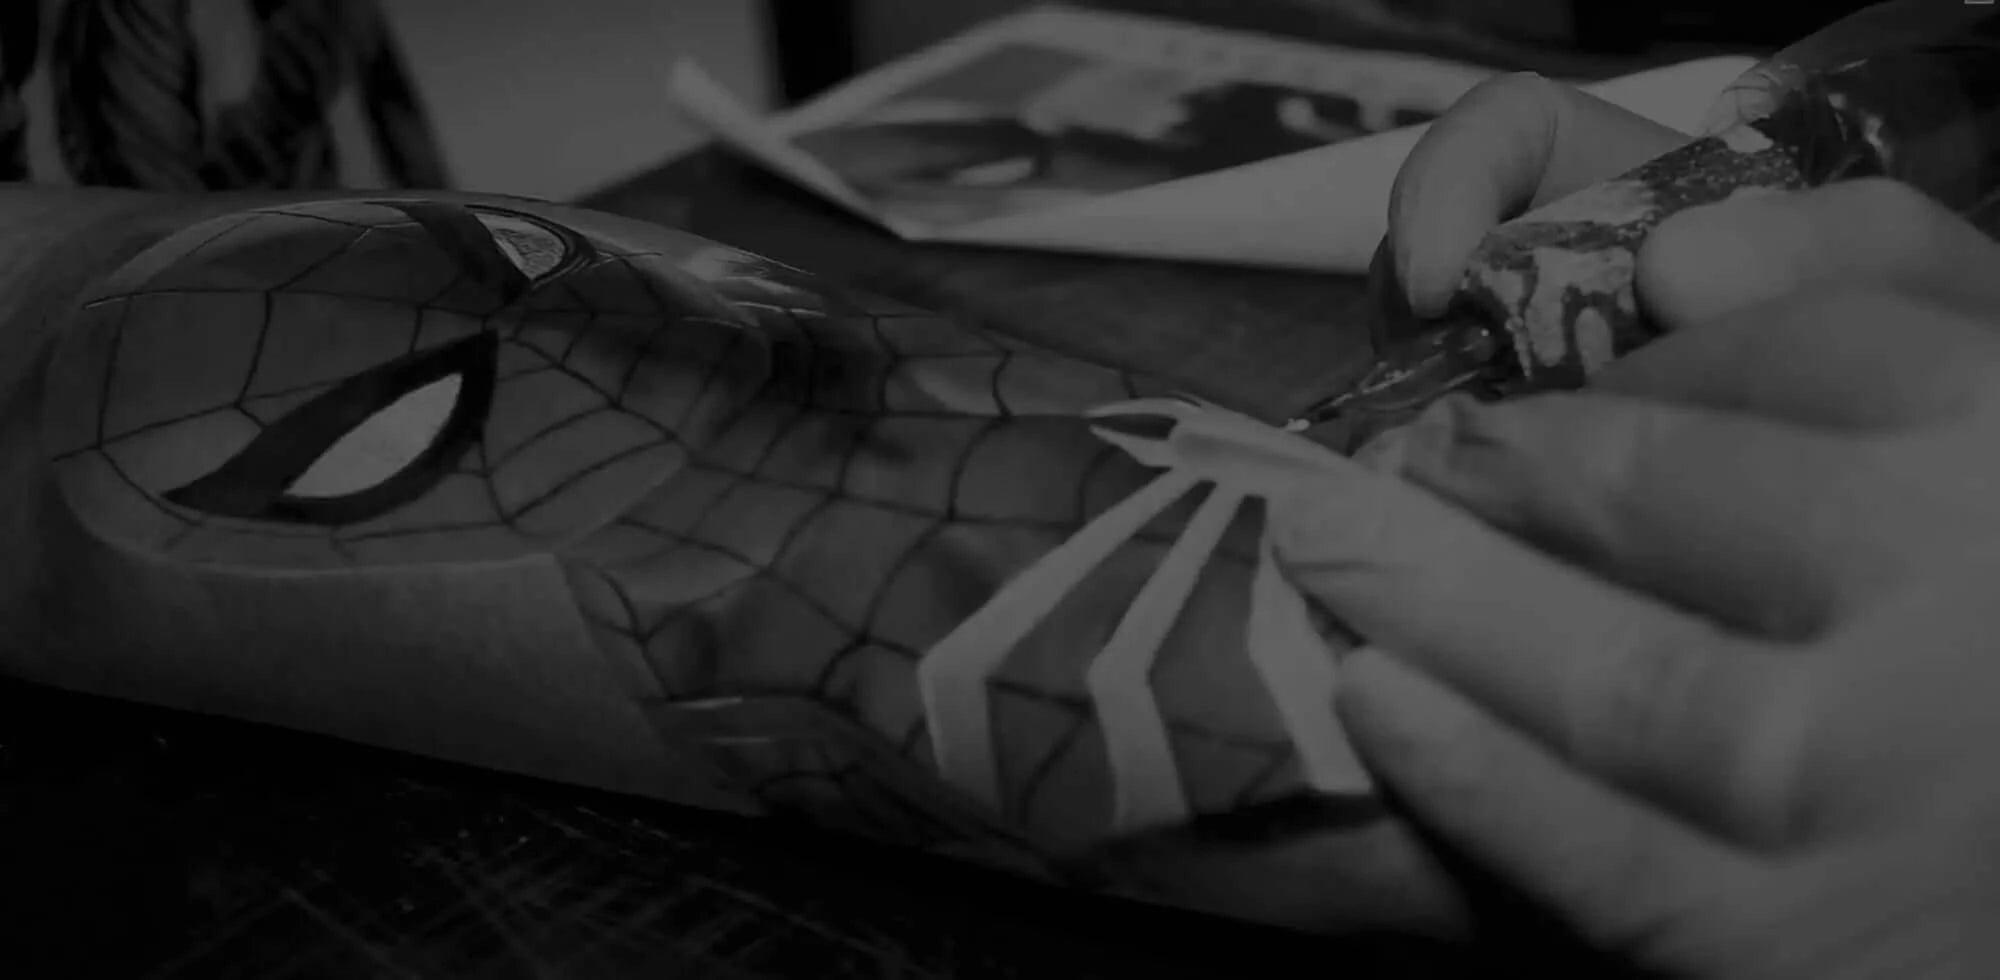 Spider-Man tattoo work created by EMALLA ELIOT cartridges needles